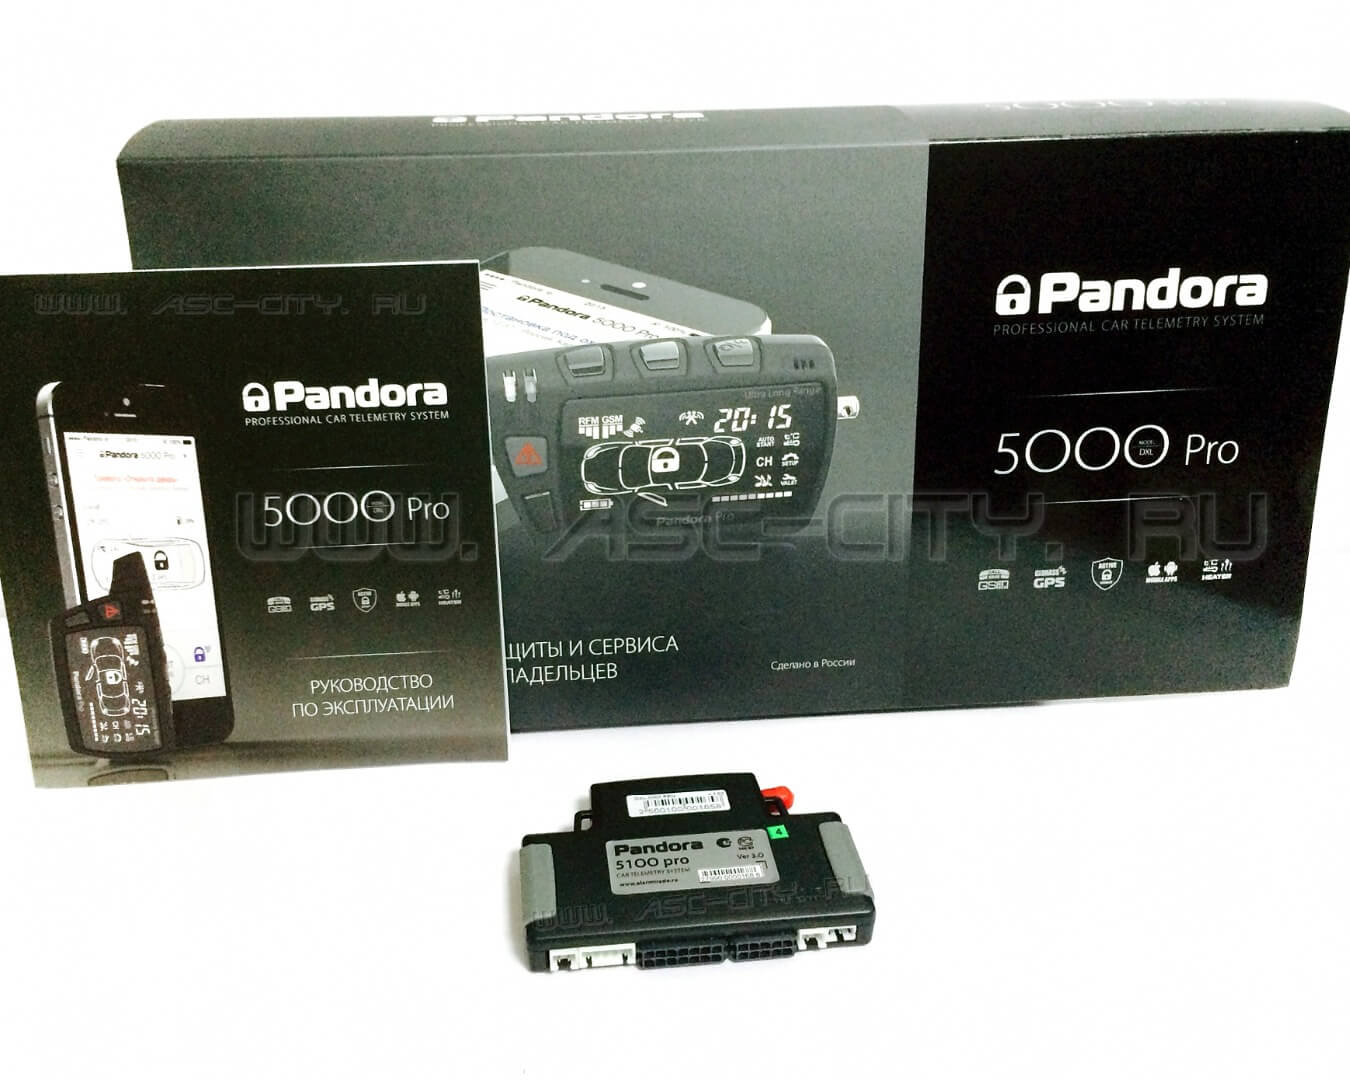 Pandora 5000 PRO